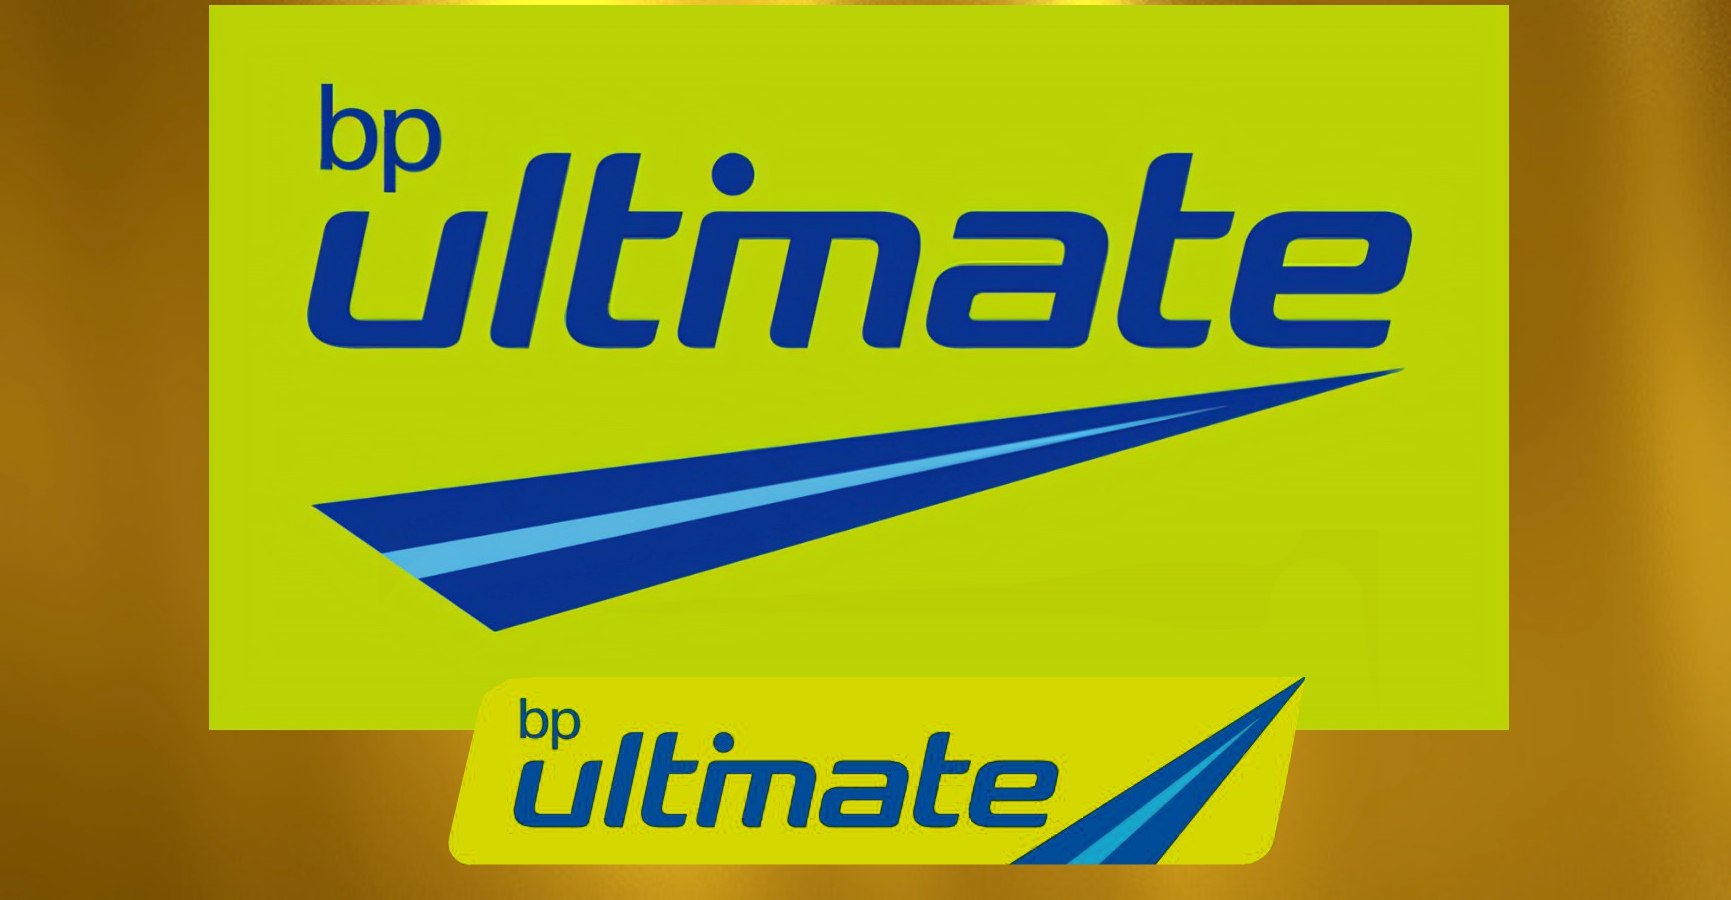 BP ultimate logo.jpg